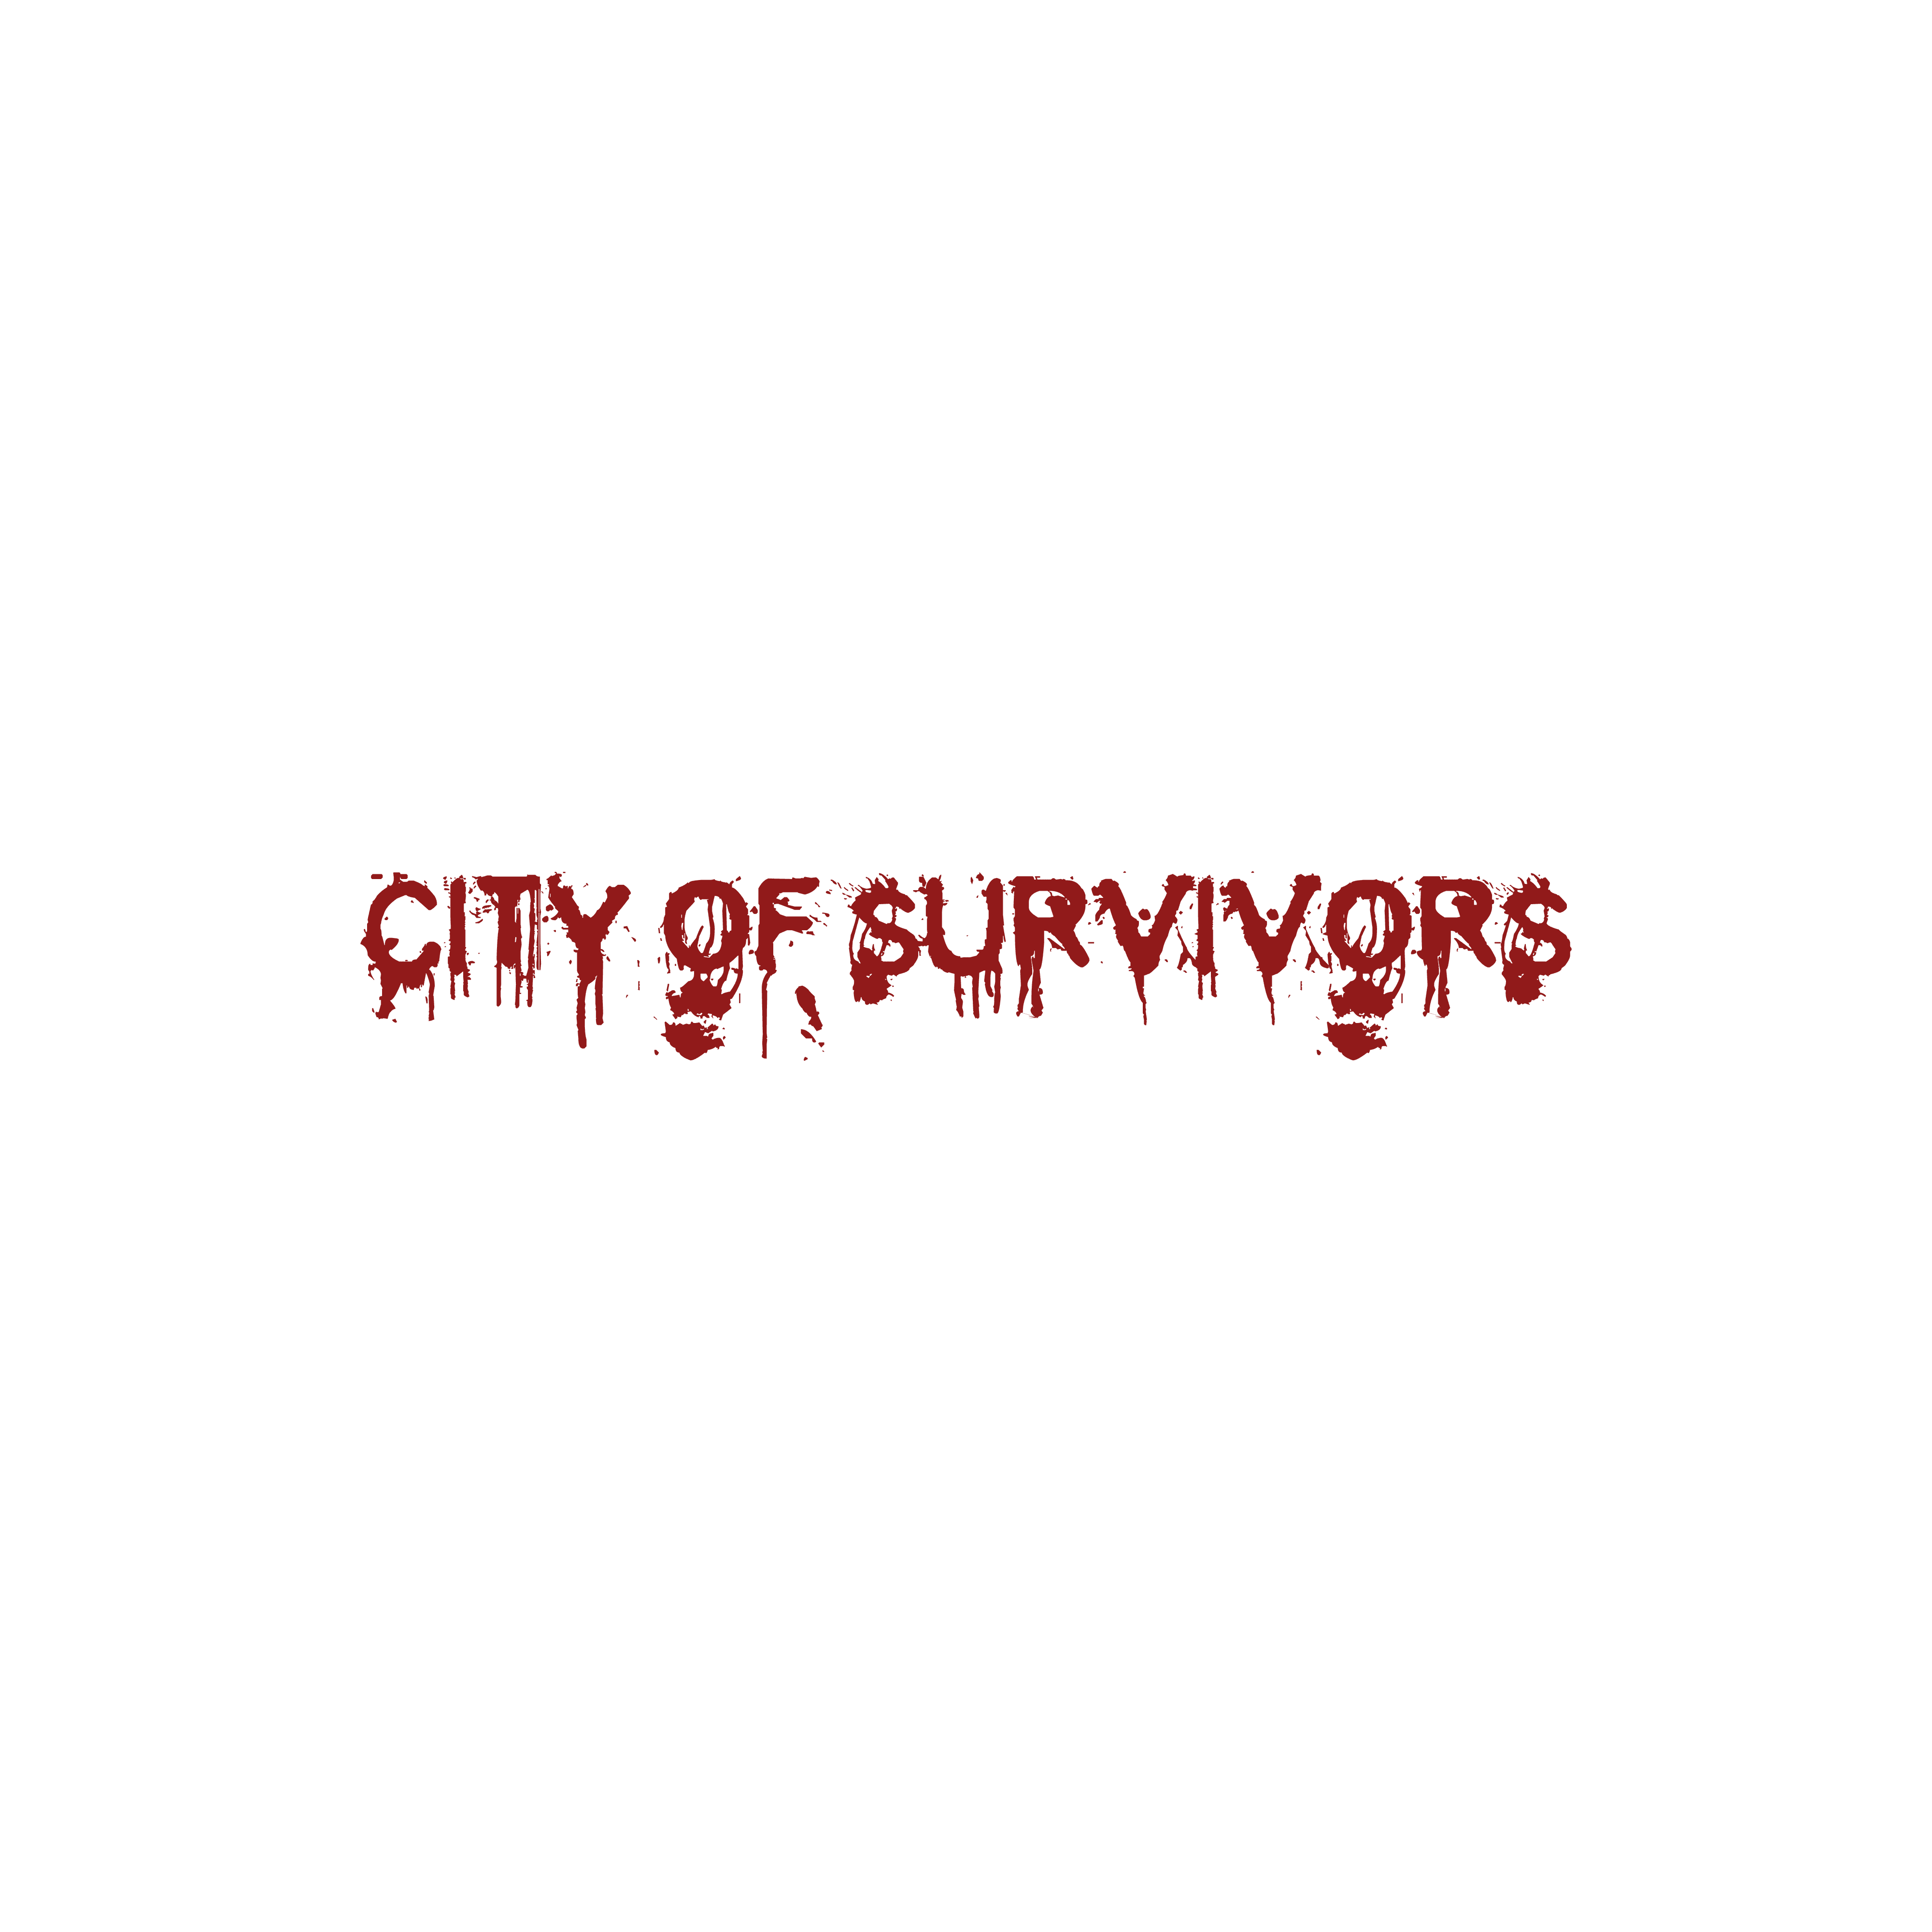 City_of_survivors